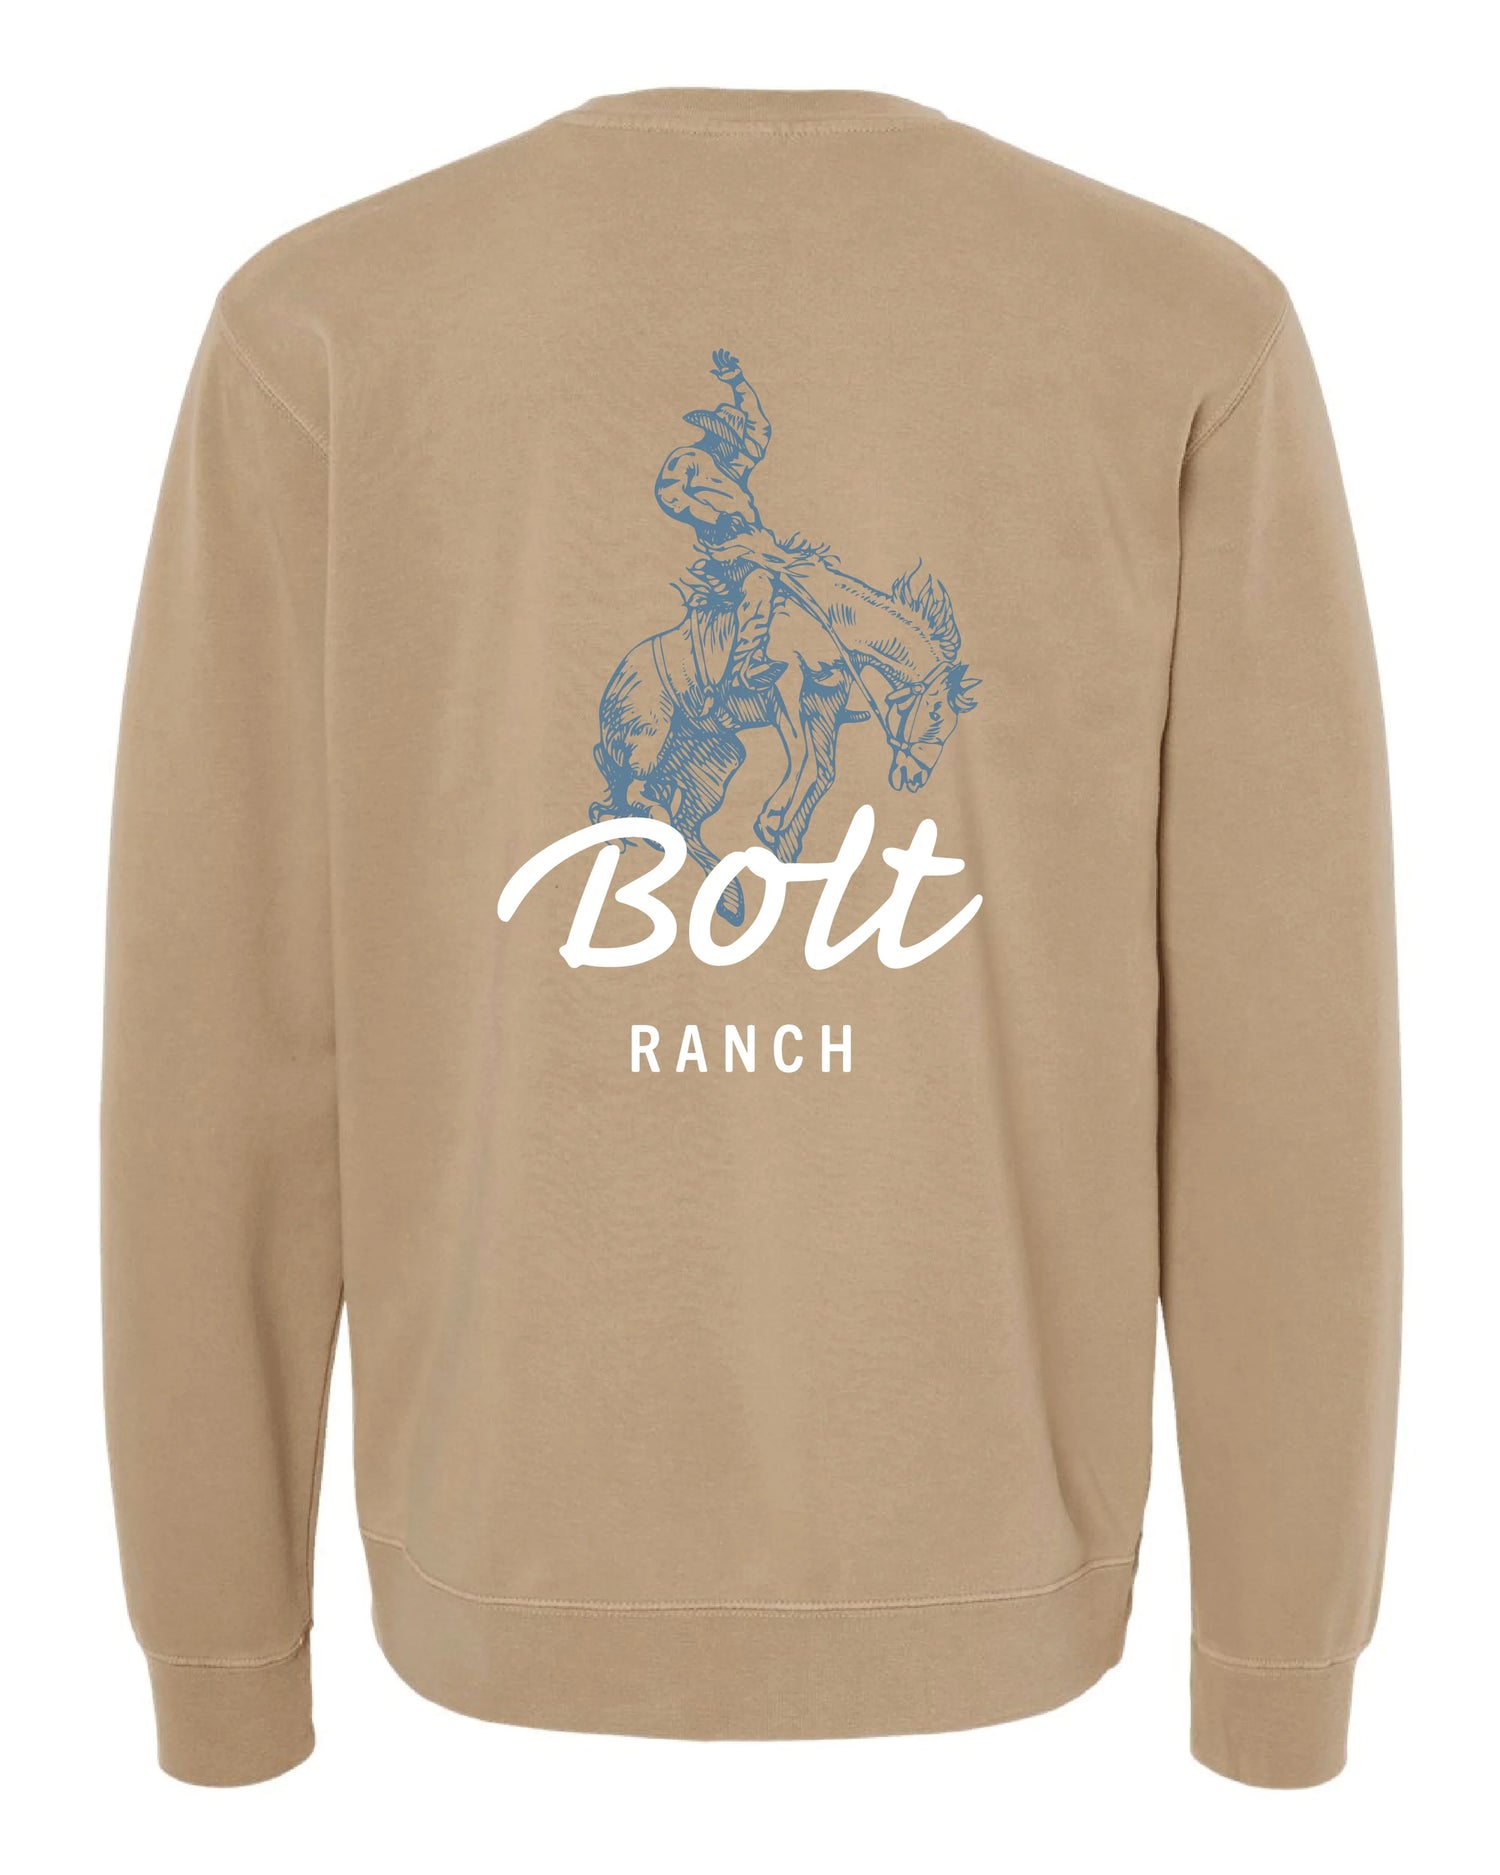 Bolt Ranch Adult Crew Neck Sweatshirt -Sandstone